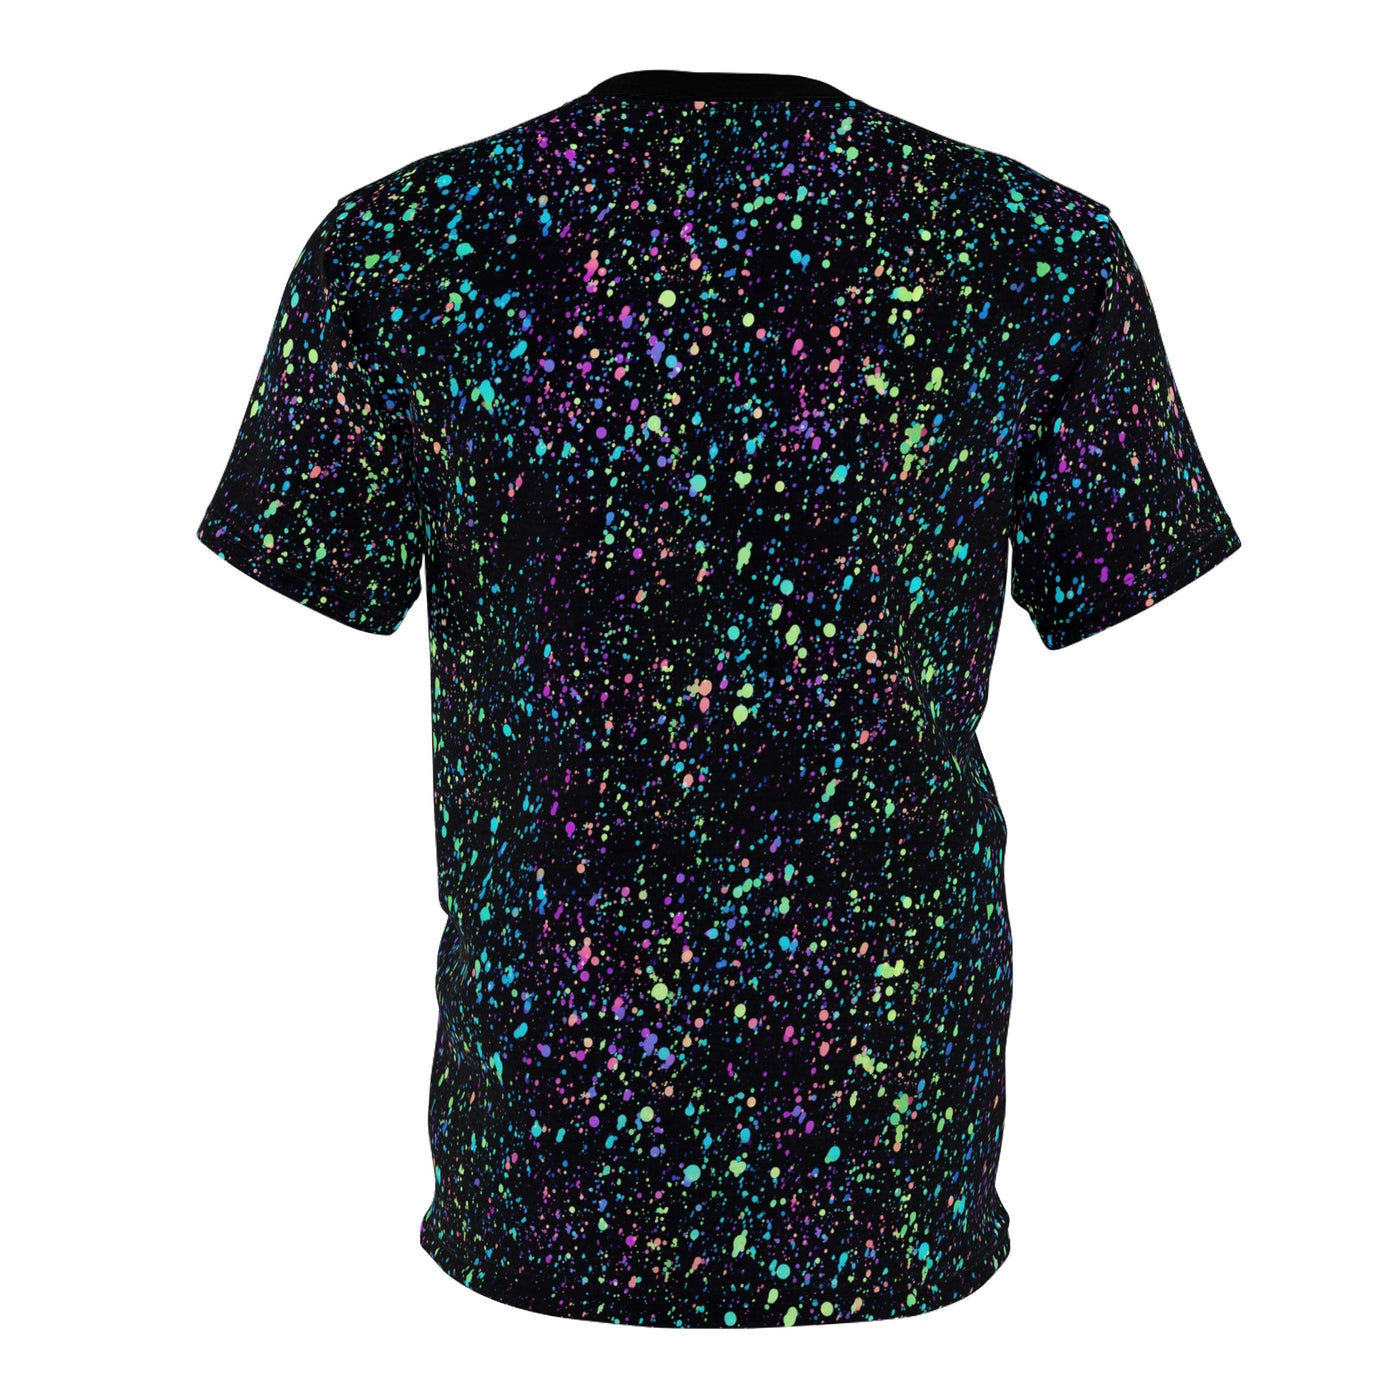 Neon Shark Glow in the Dark Effect T-shirt